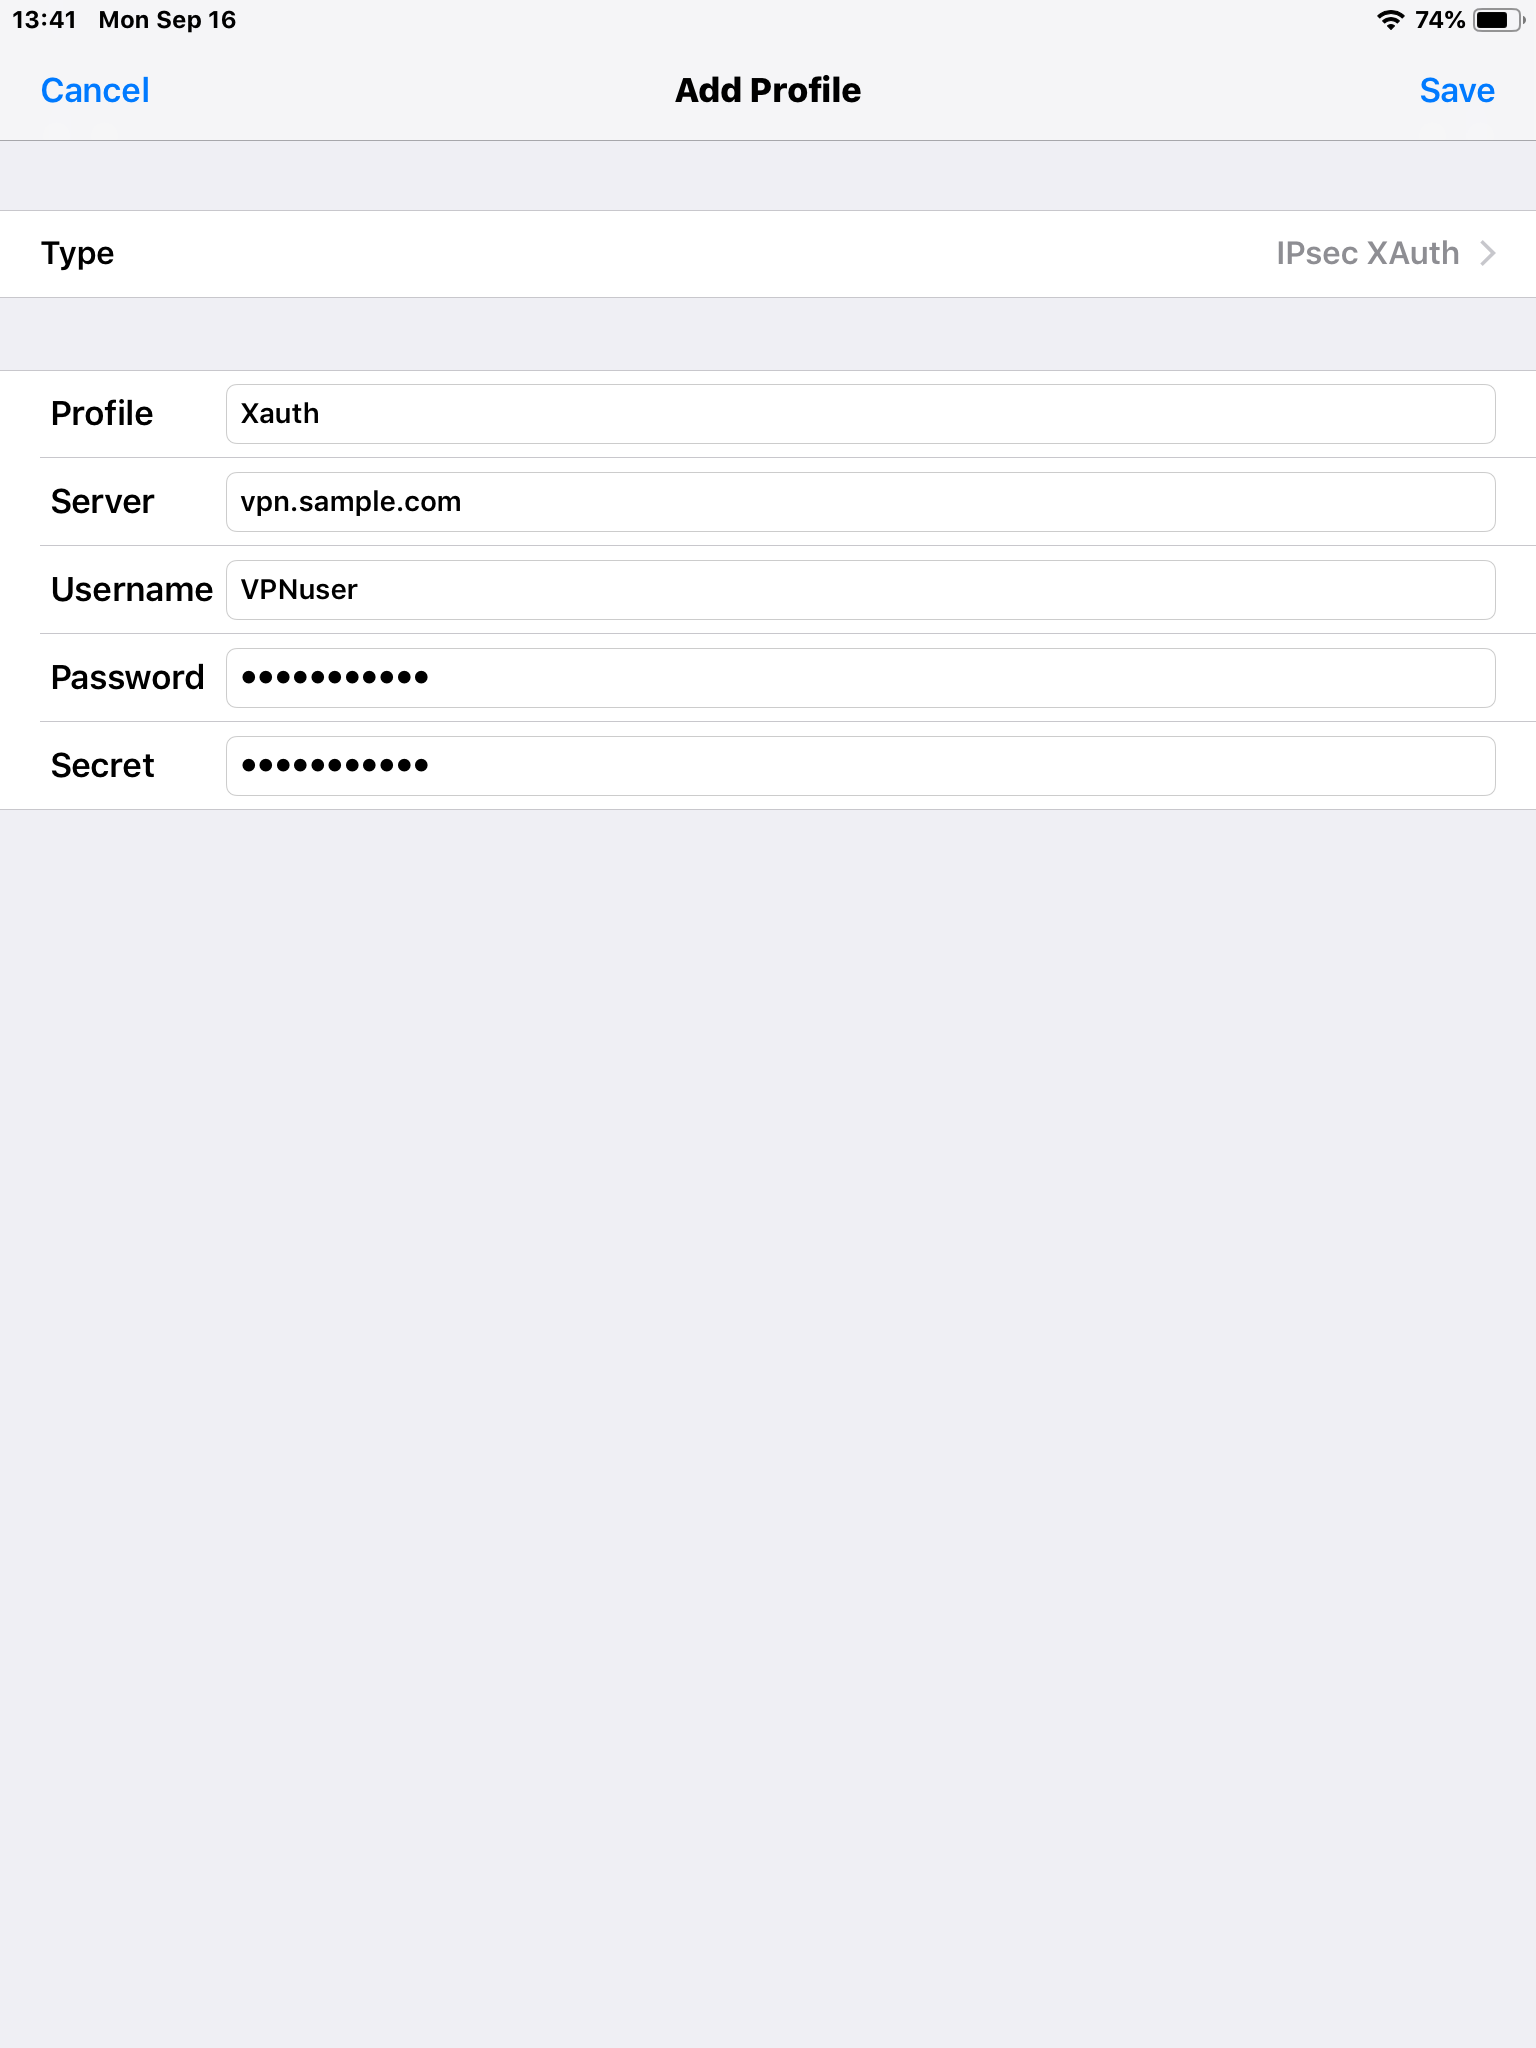 скриншот конфигурации iOS VPN